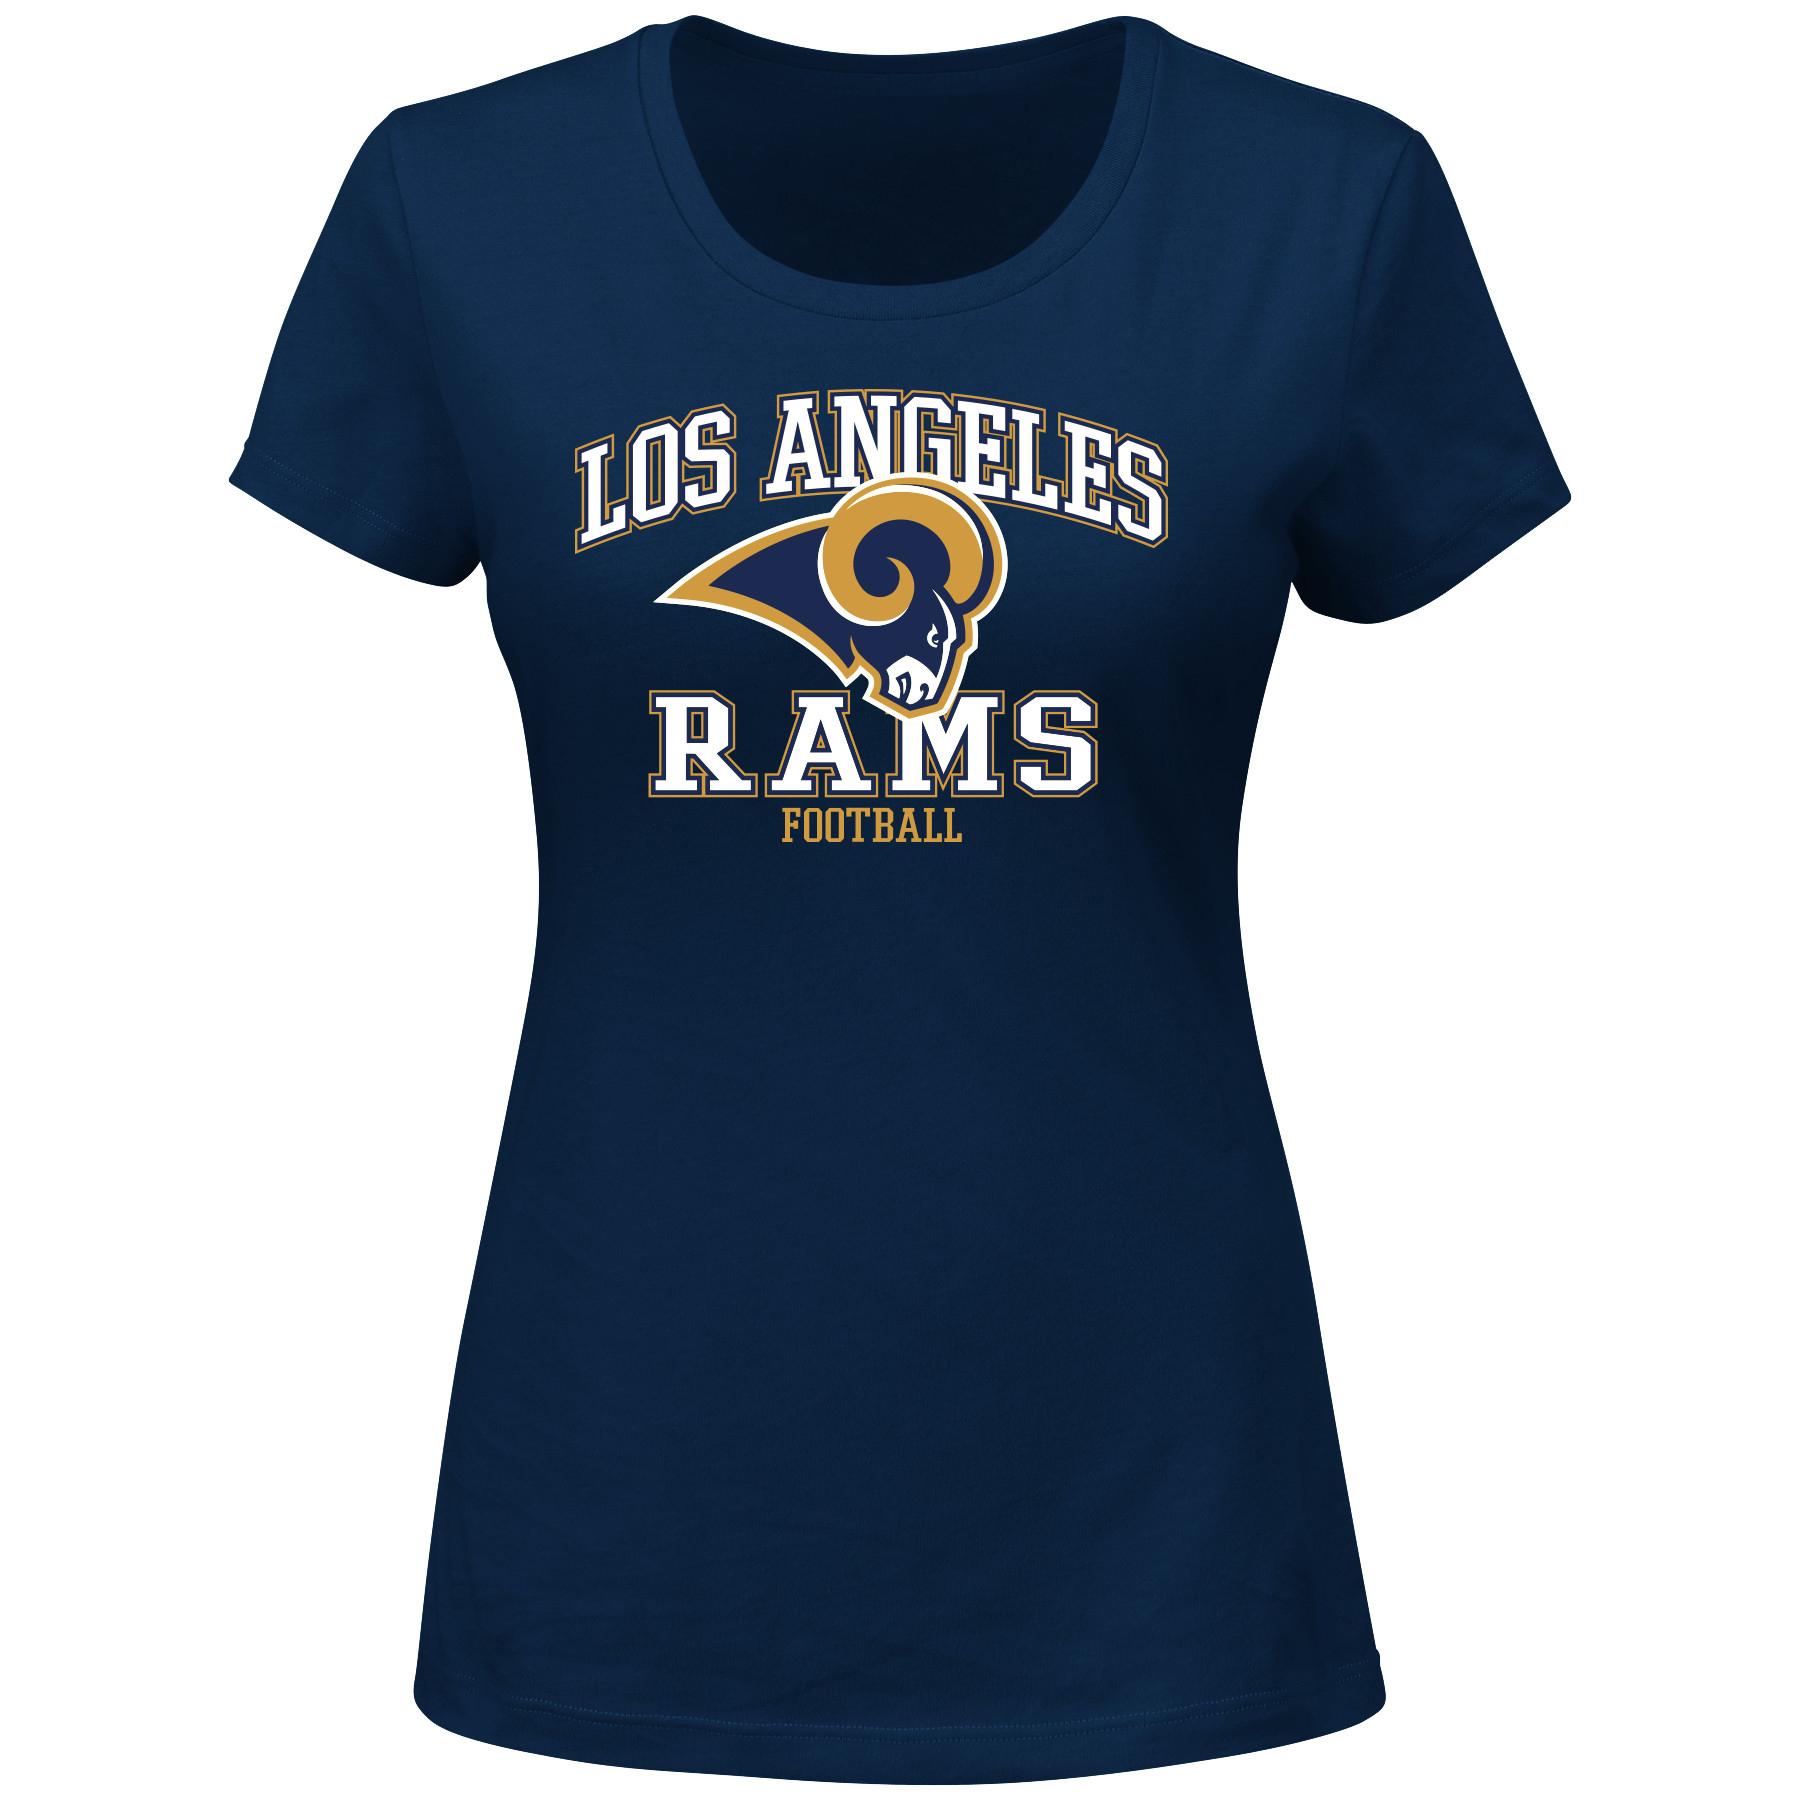 NFL Women's Graphic T-Shirt - Los Angeles Rams